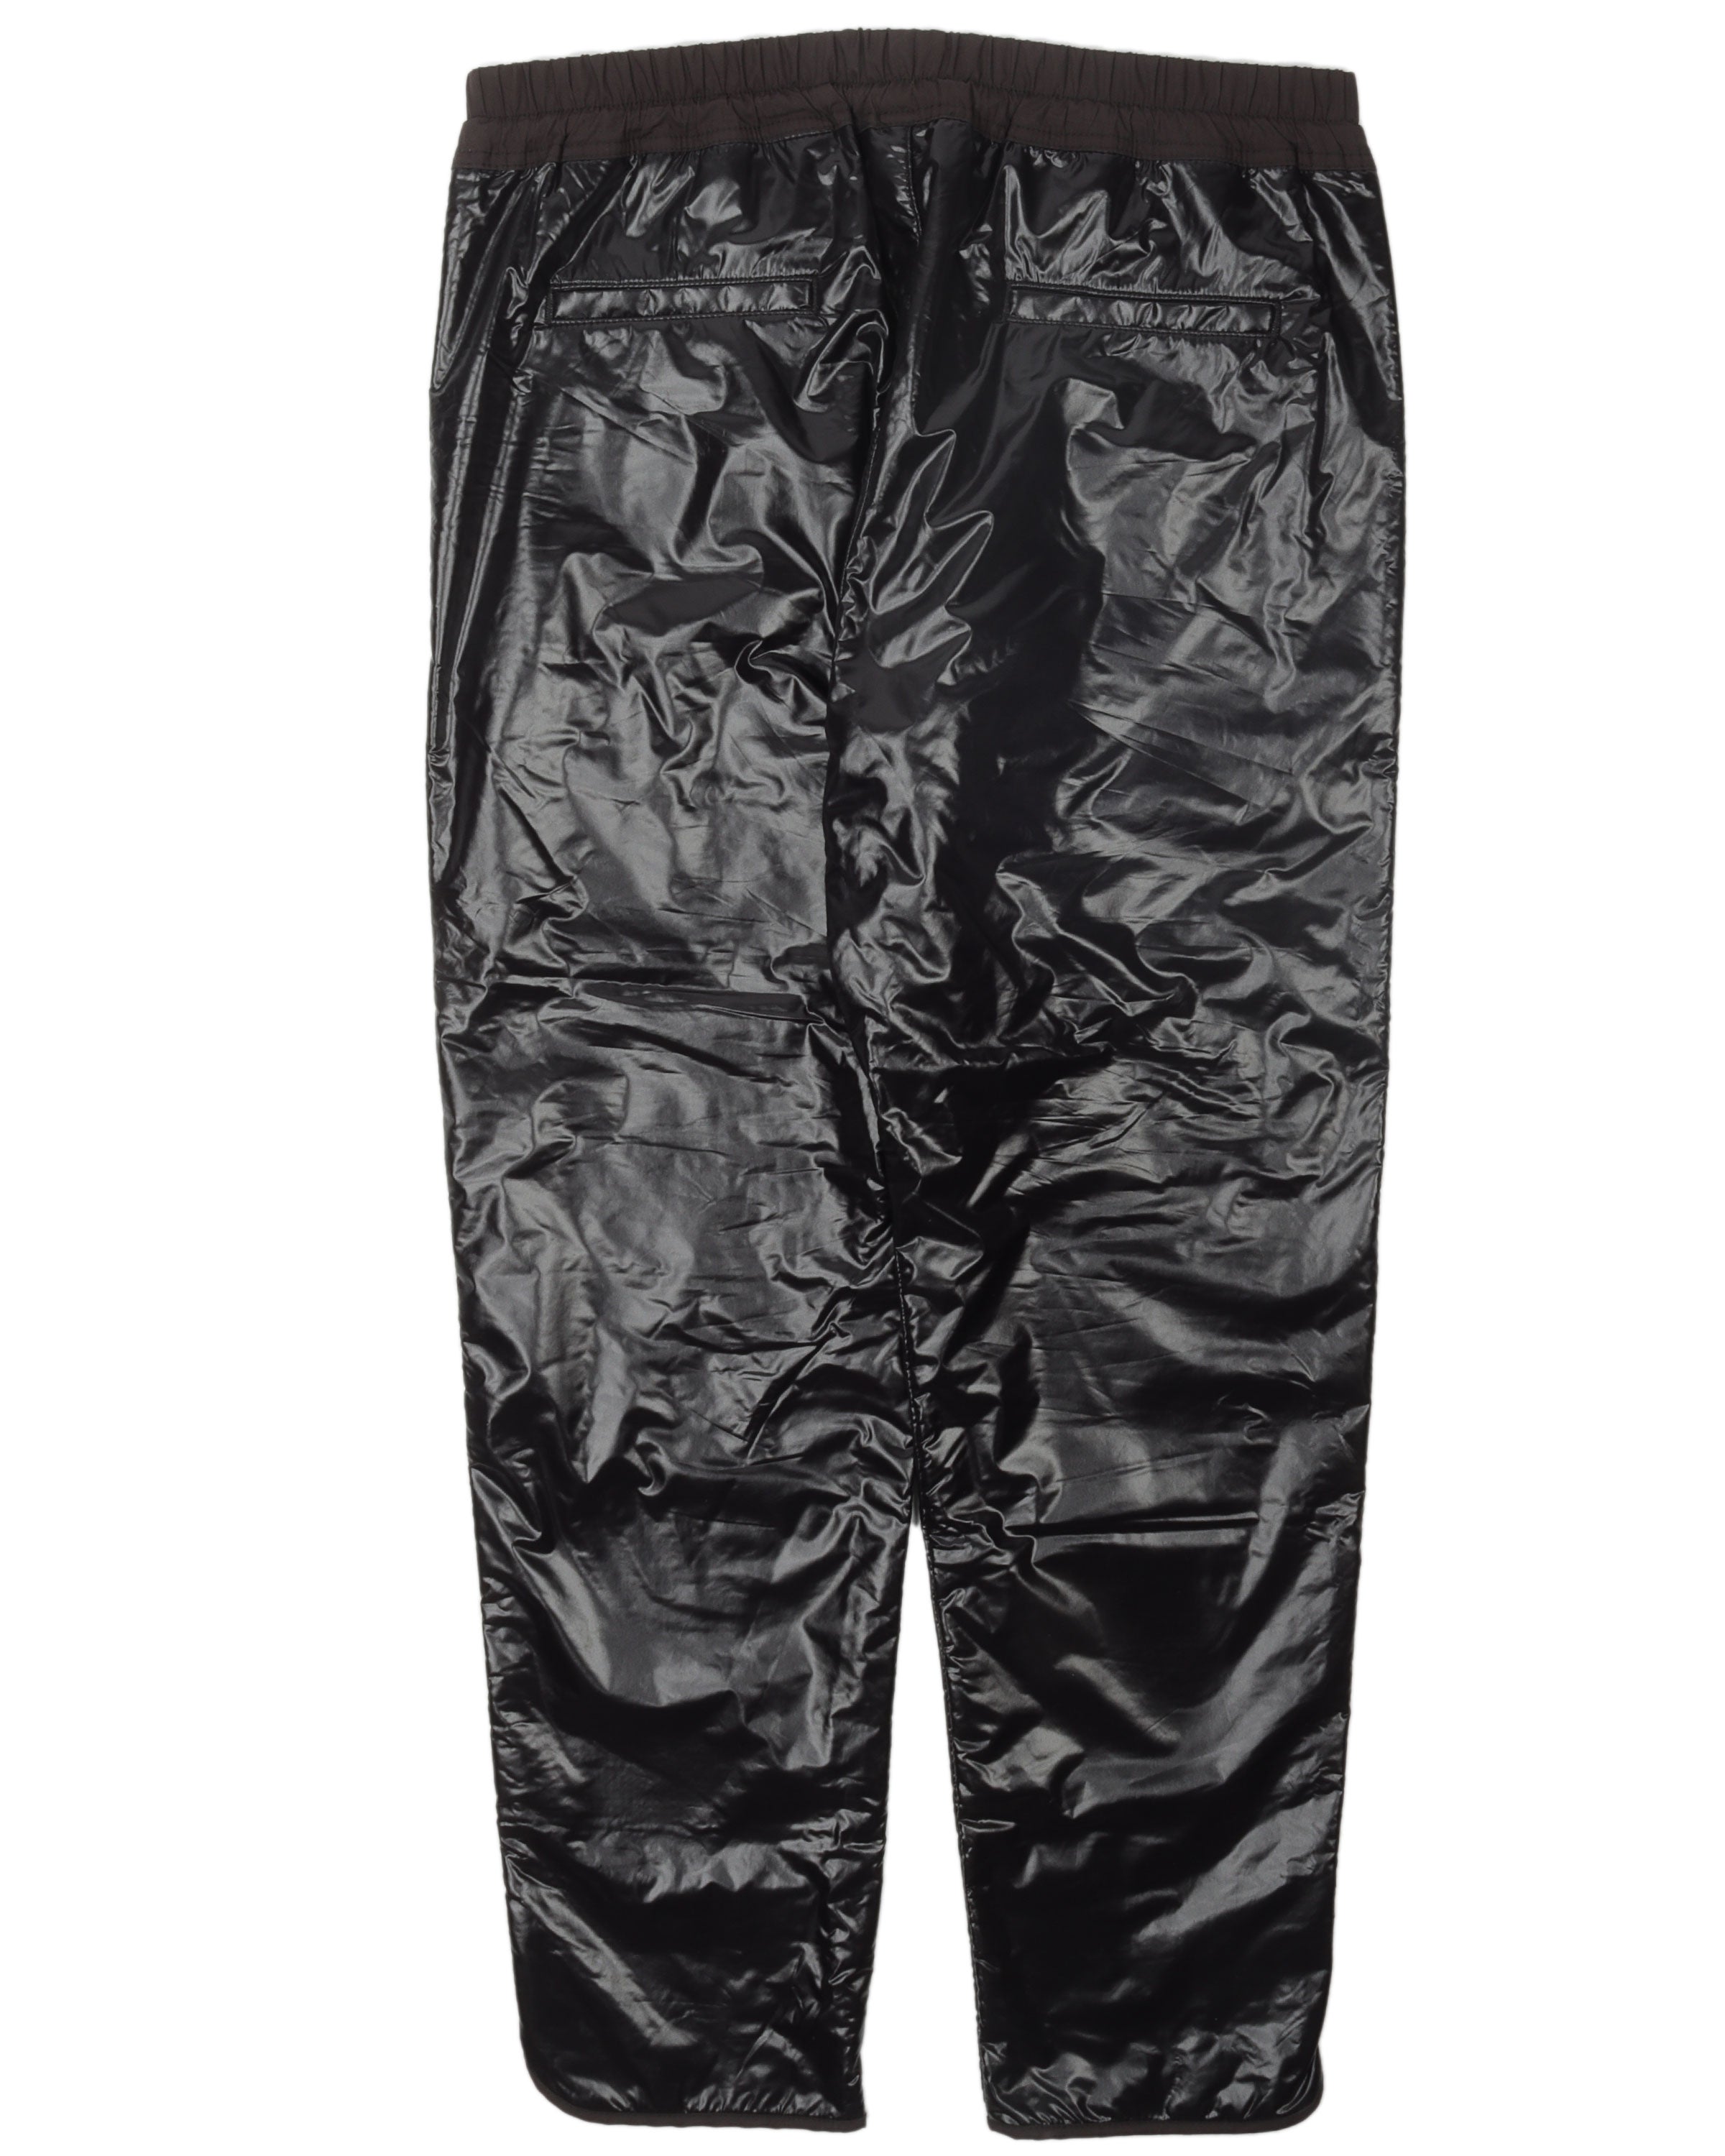 Sixth Collection Shiny Pants